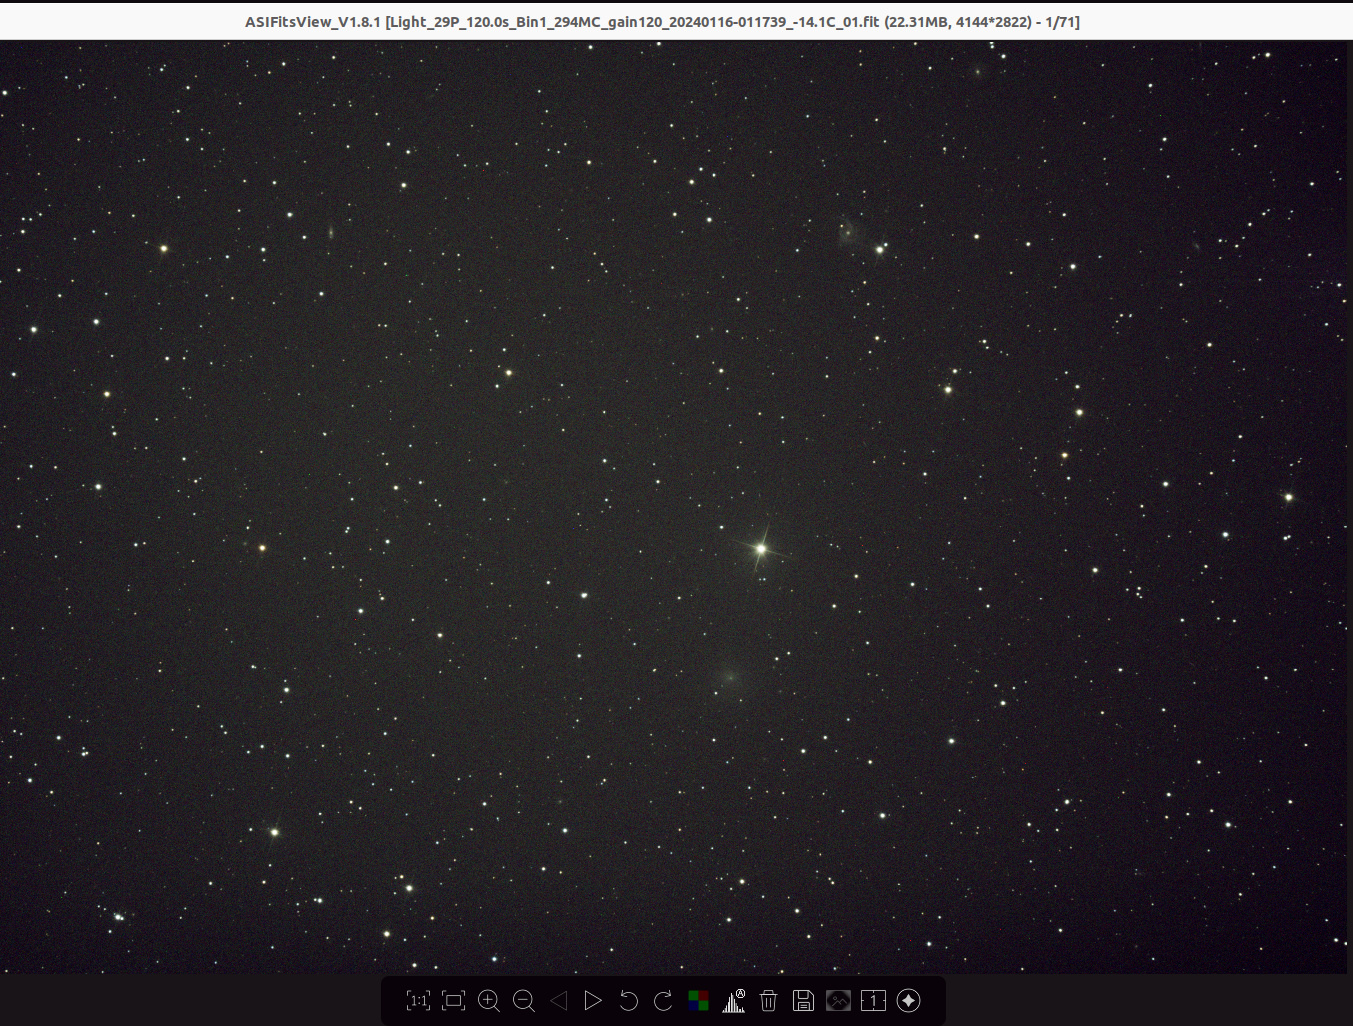 29P_NGC4595_raw.jpg.0024fc9f2d9ebdfb9c083f0167b03375.jpg